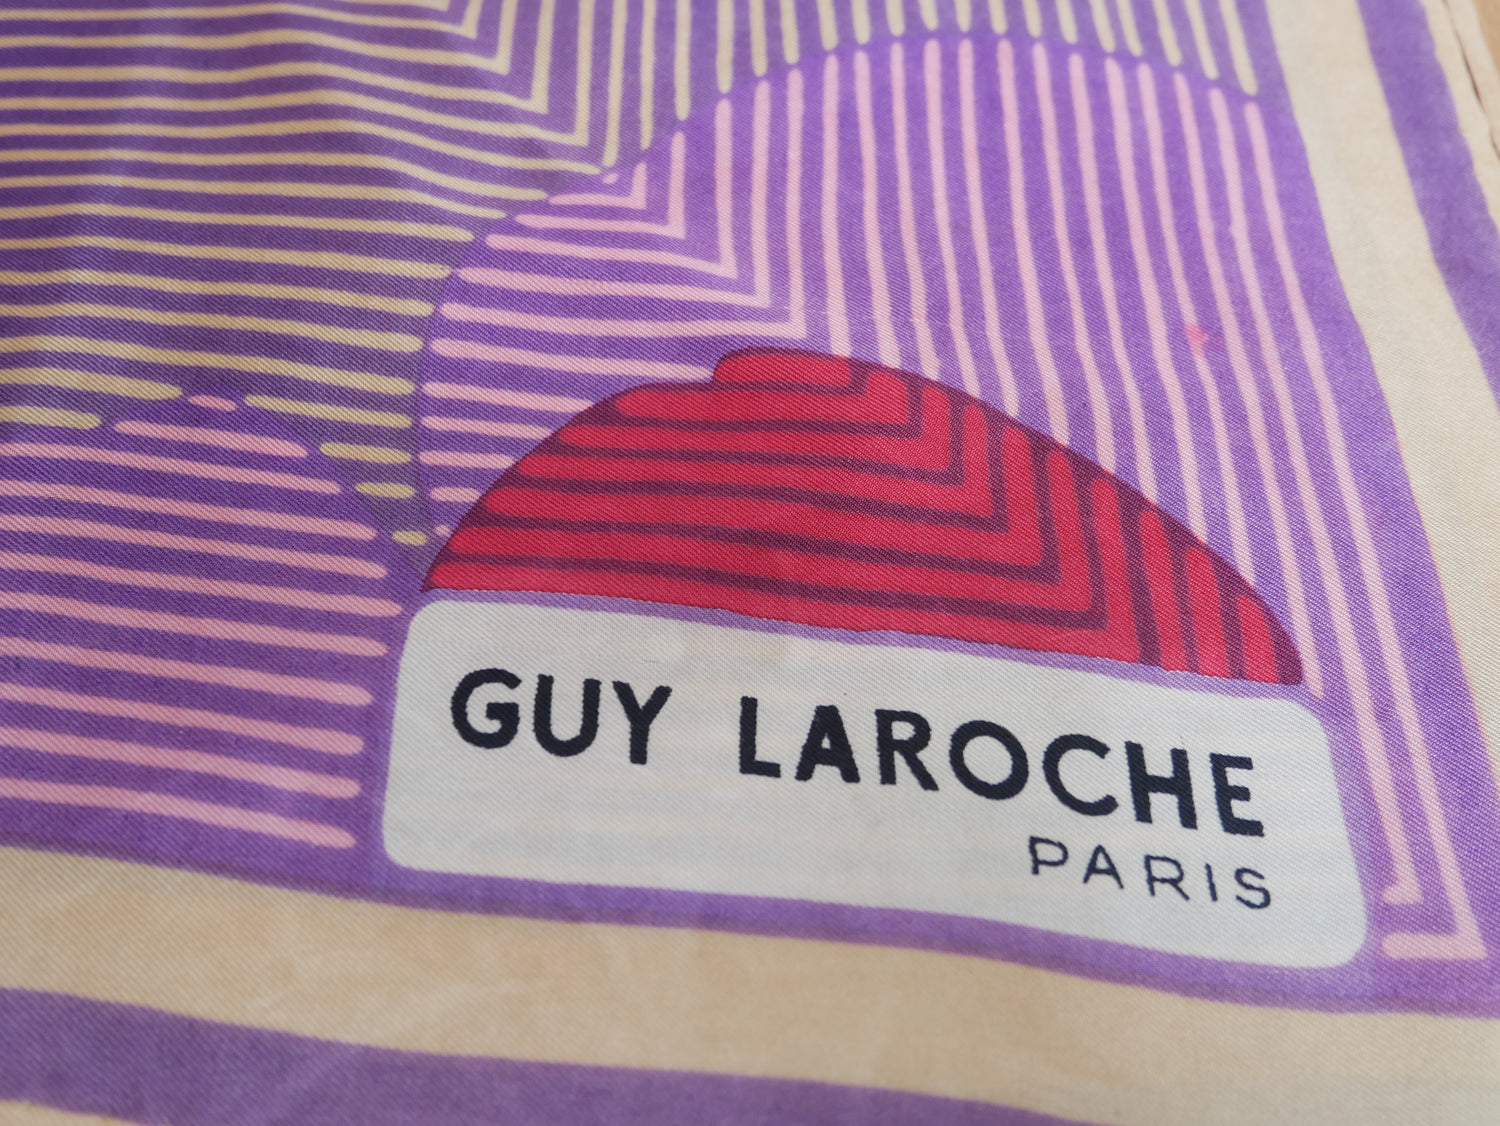 GUY LAROCHE Scarves vintage Lysis Paris pre-owned secondhand